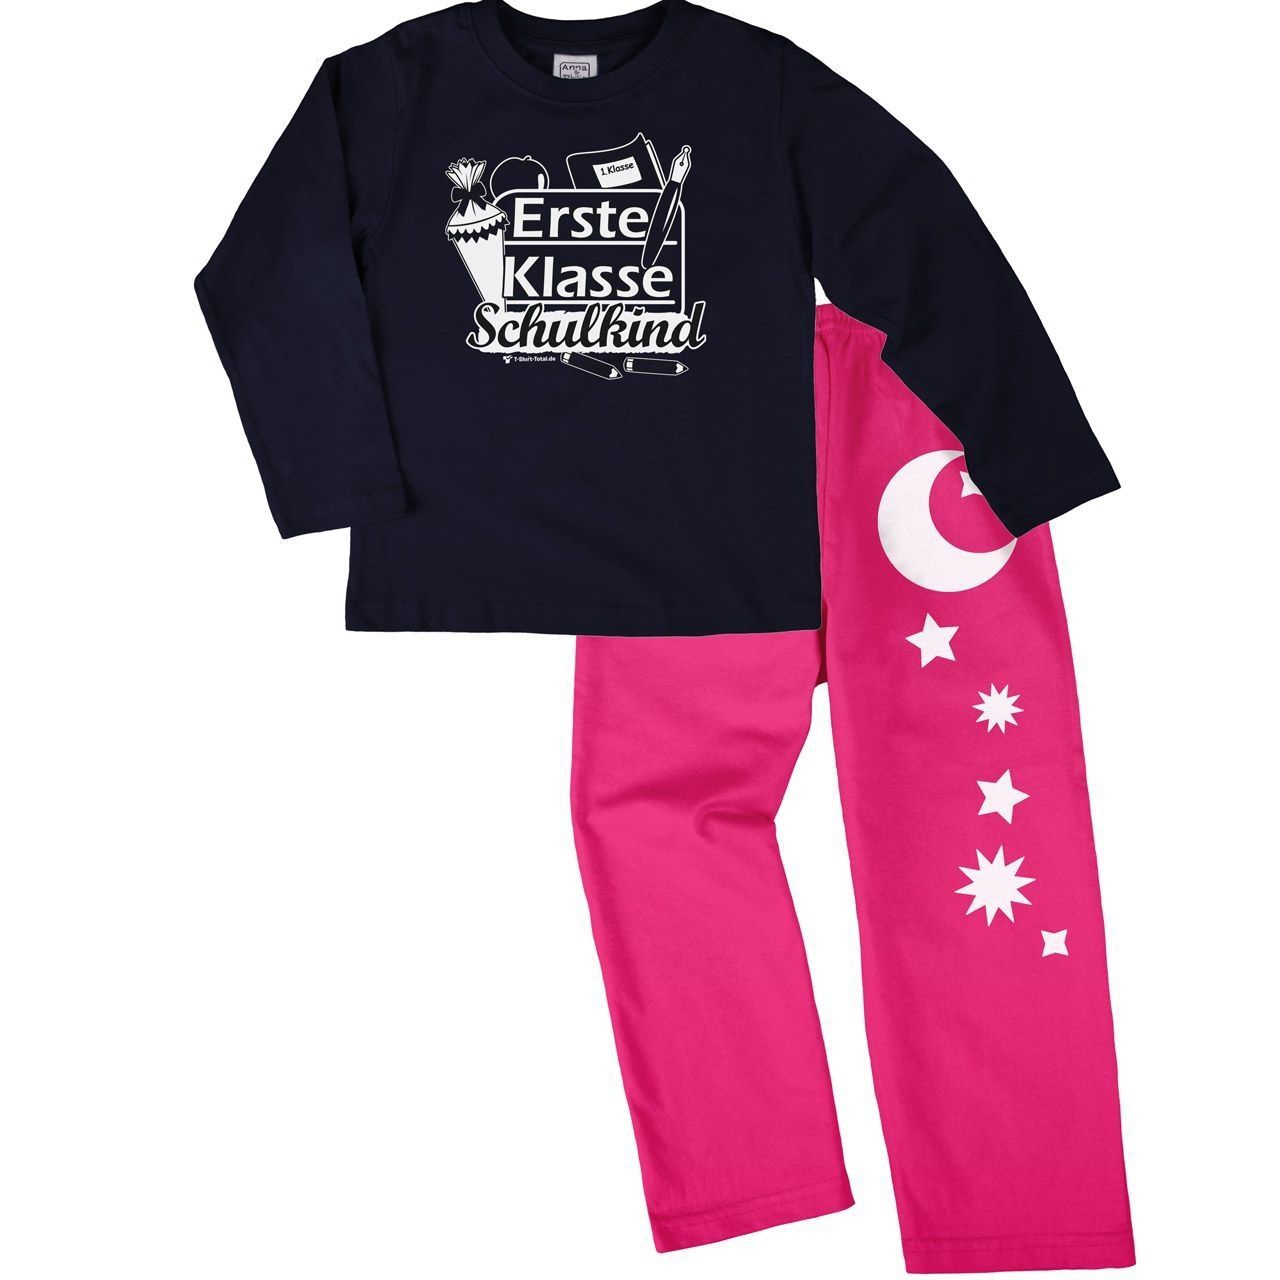 Erste Klasse Schulkind Pyjama Set navy / pink 122 / 128